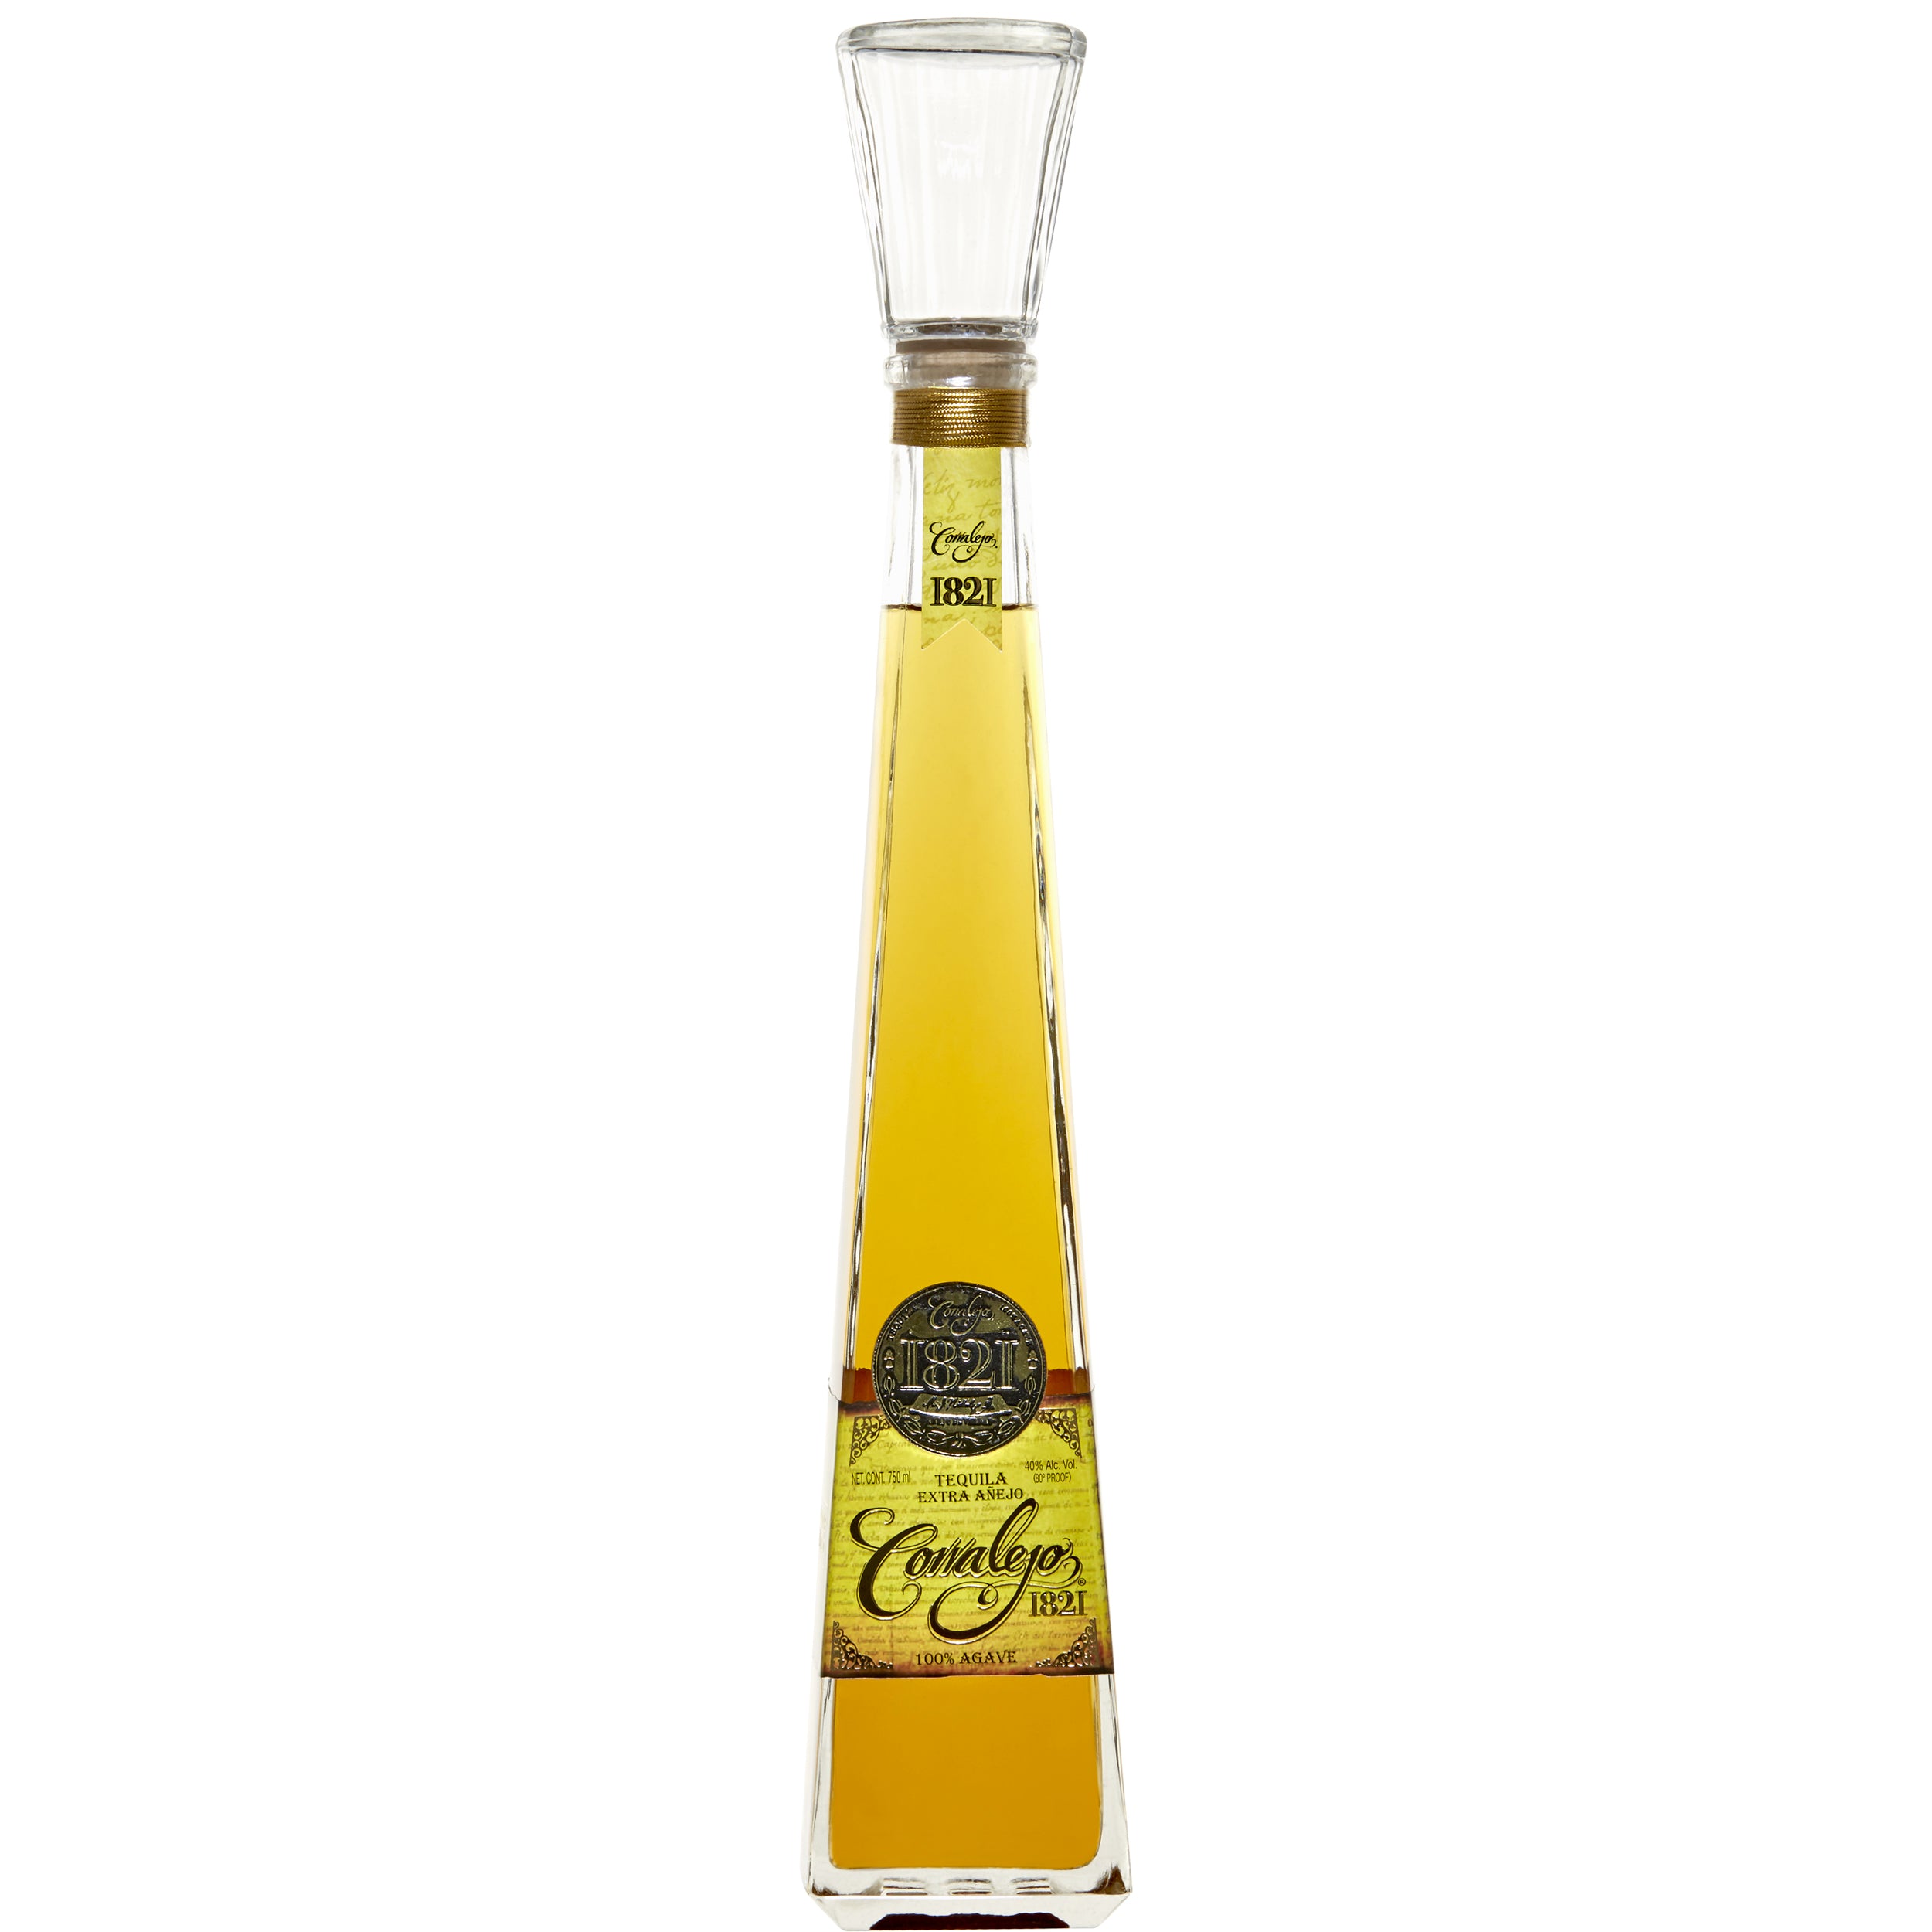 Corralejo Extra Anejo Tequila 1821